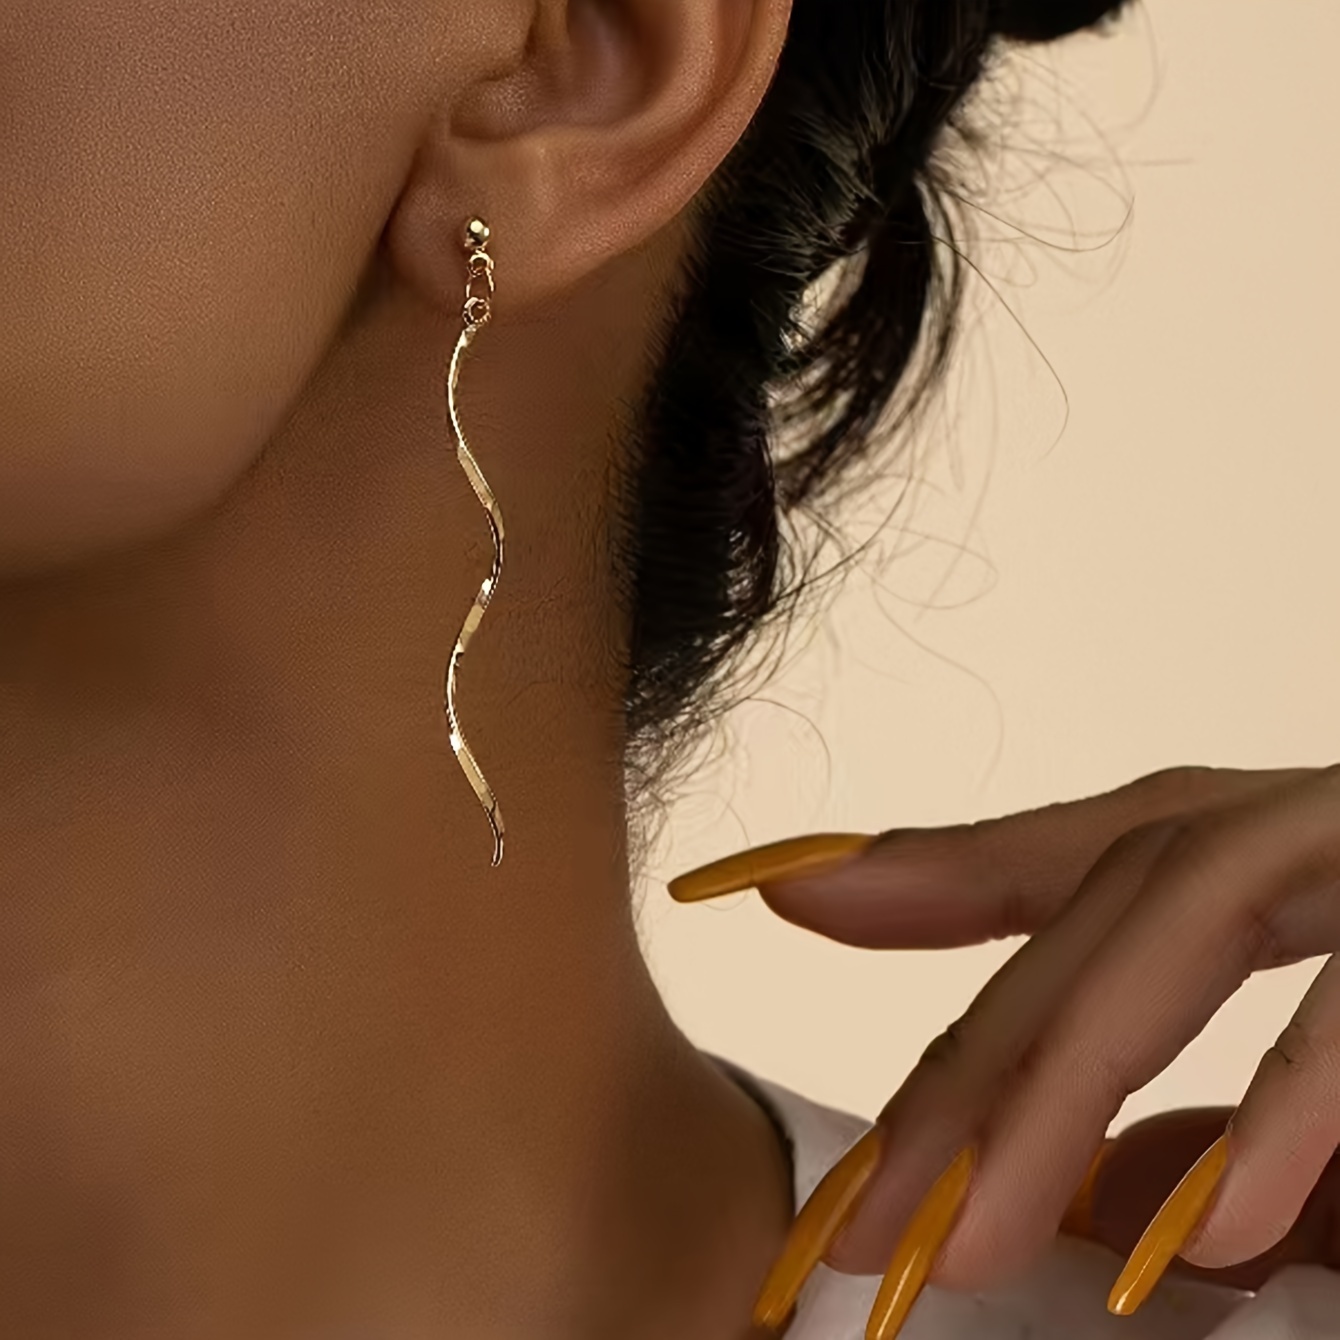 

Geometric Spiral Line Shaped Earrings Elegant Ears Decoration Stylish Accessories For Women